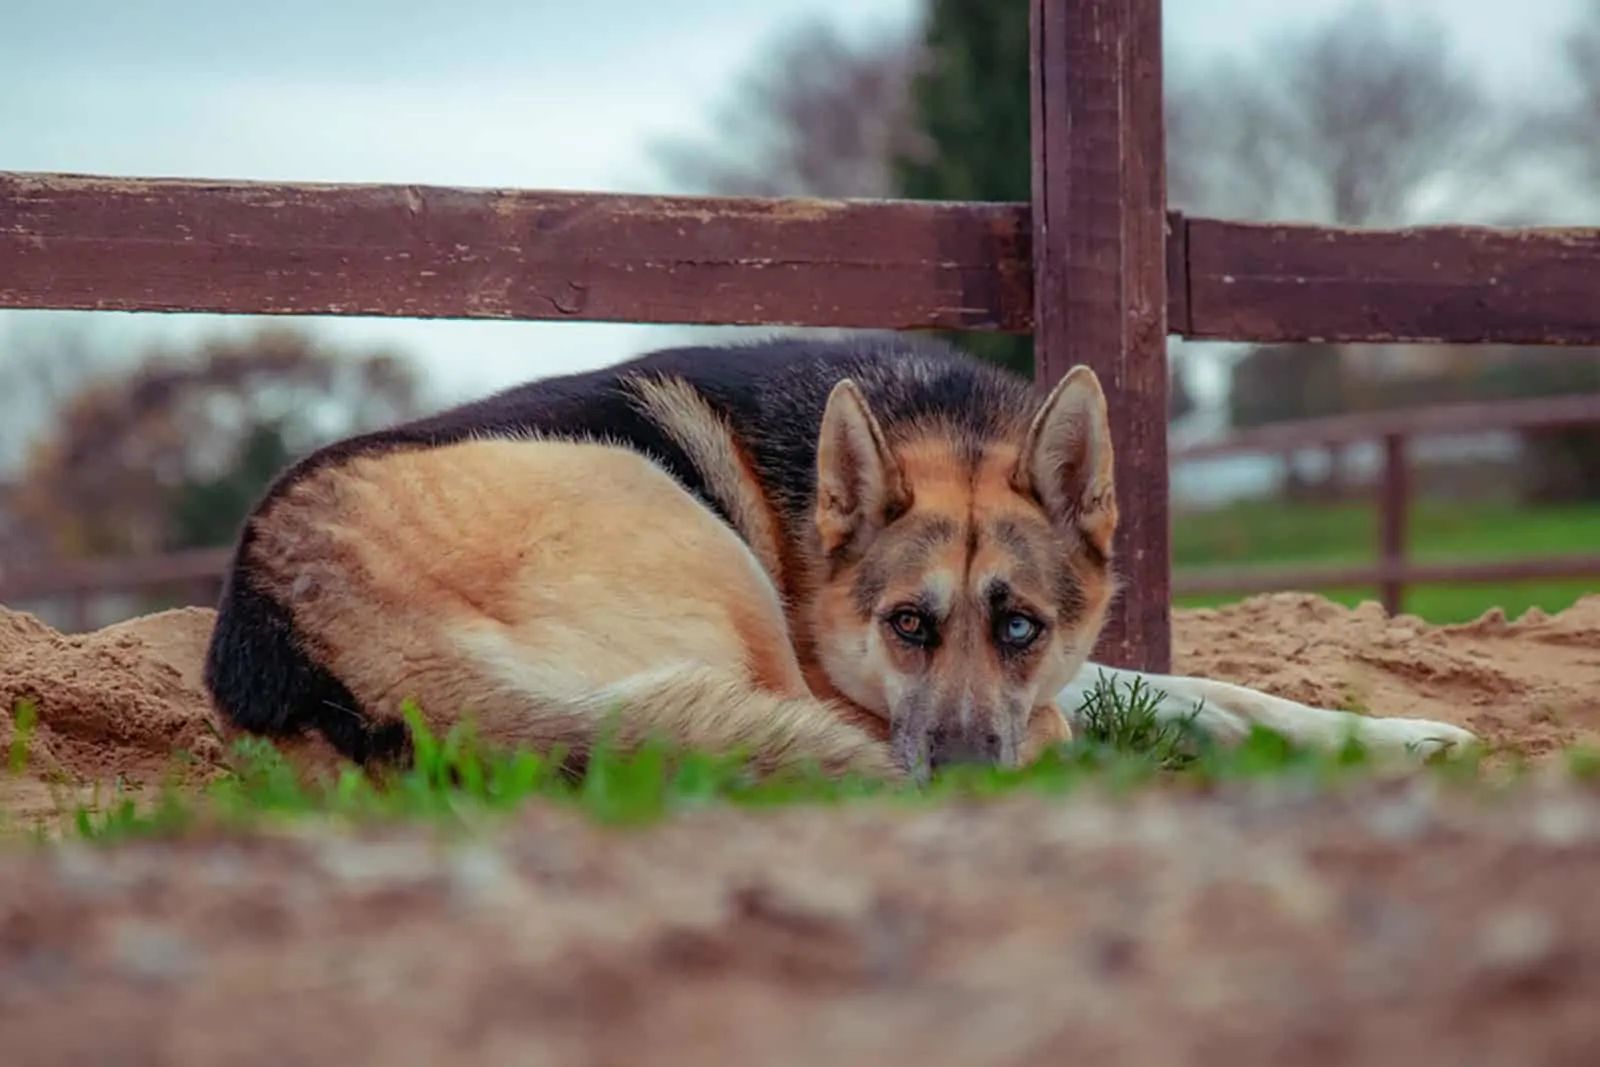 german shepherd dog with heterochromia syndrome lying on the grass